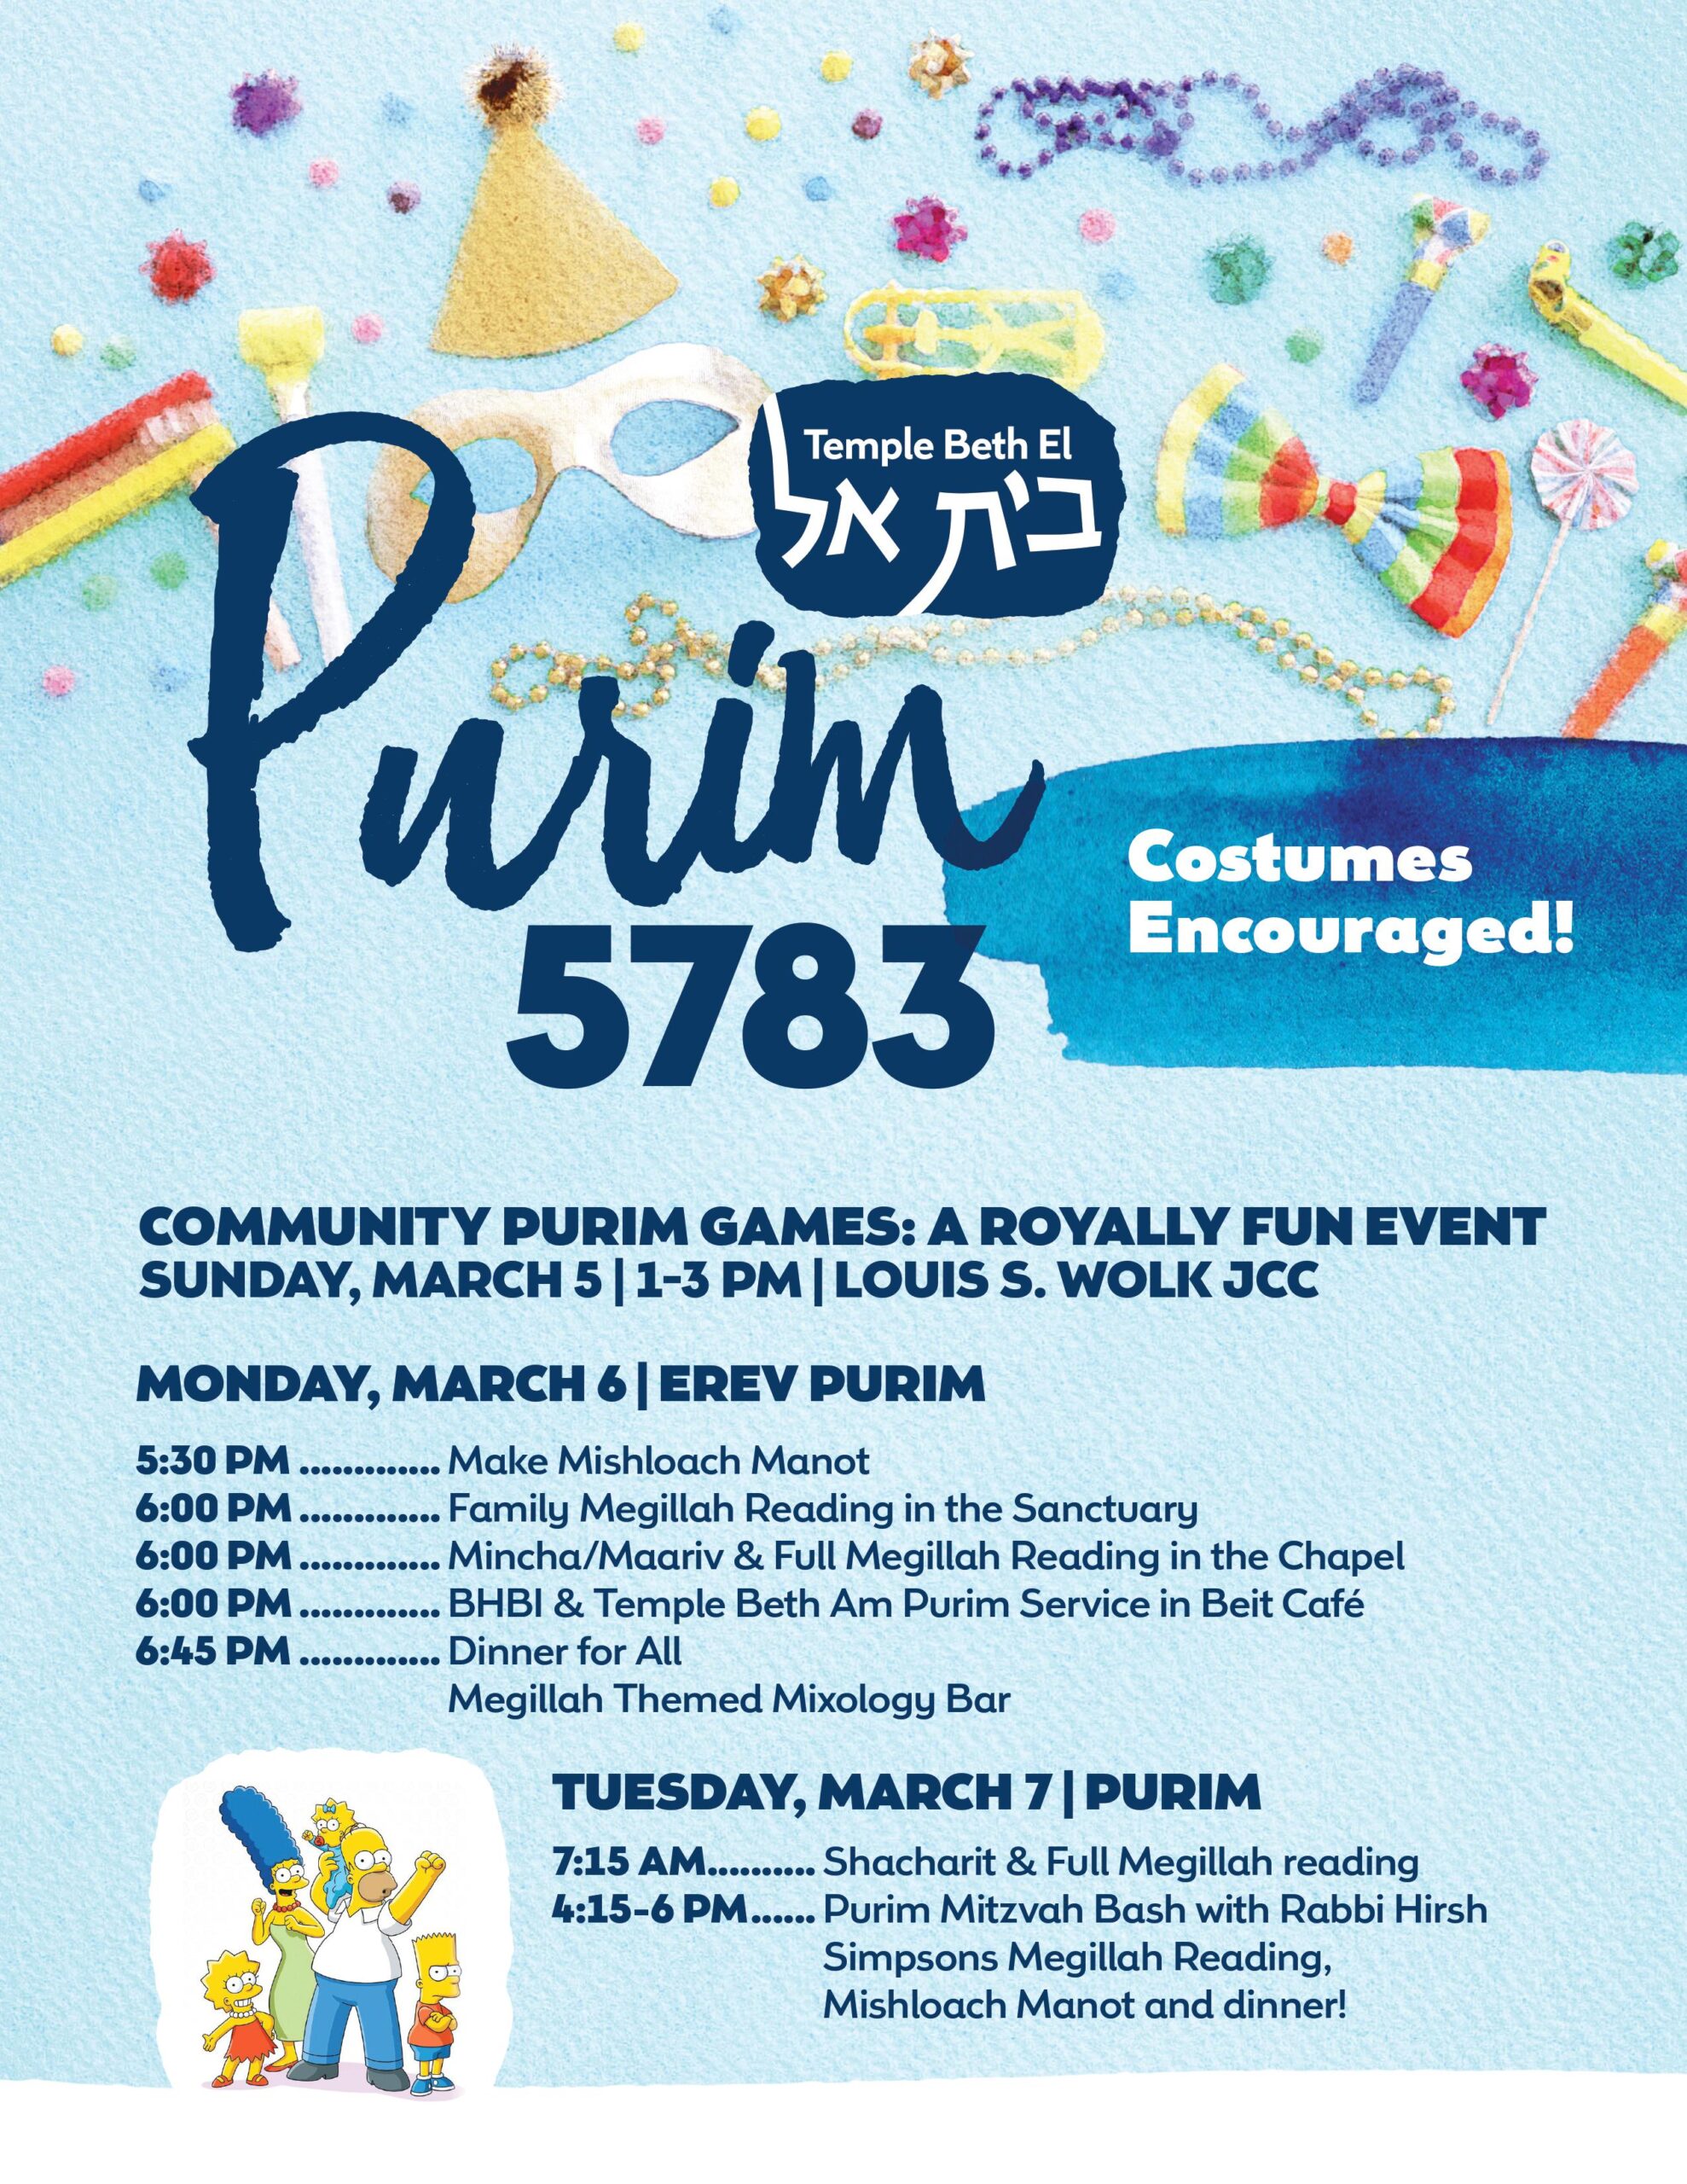 Purim Mitzvah Bash